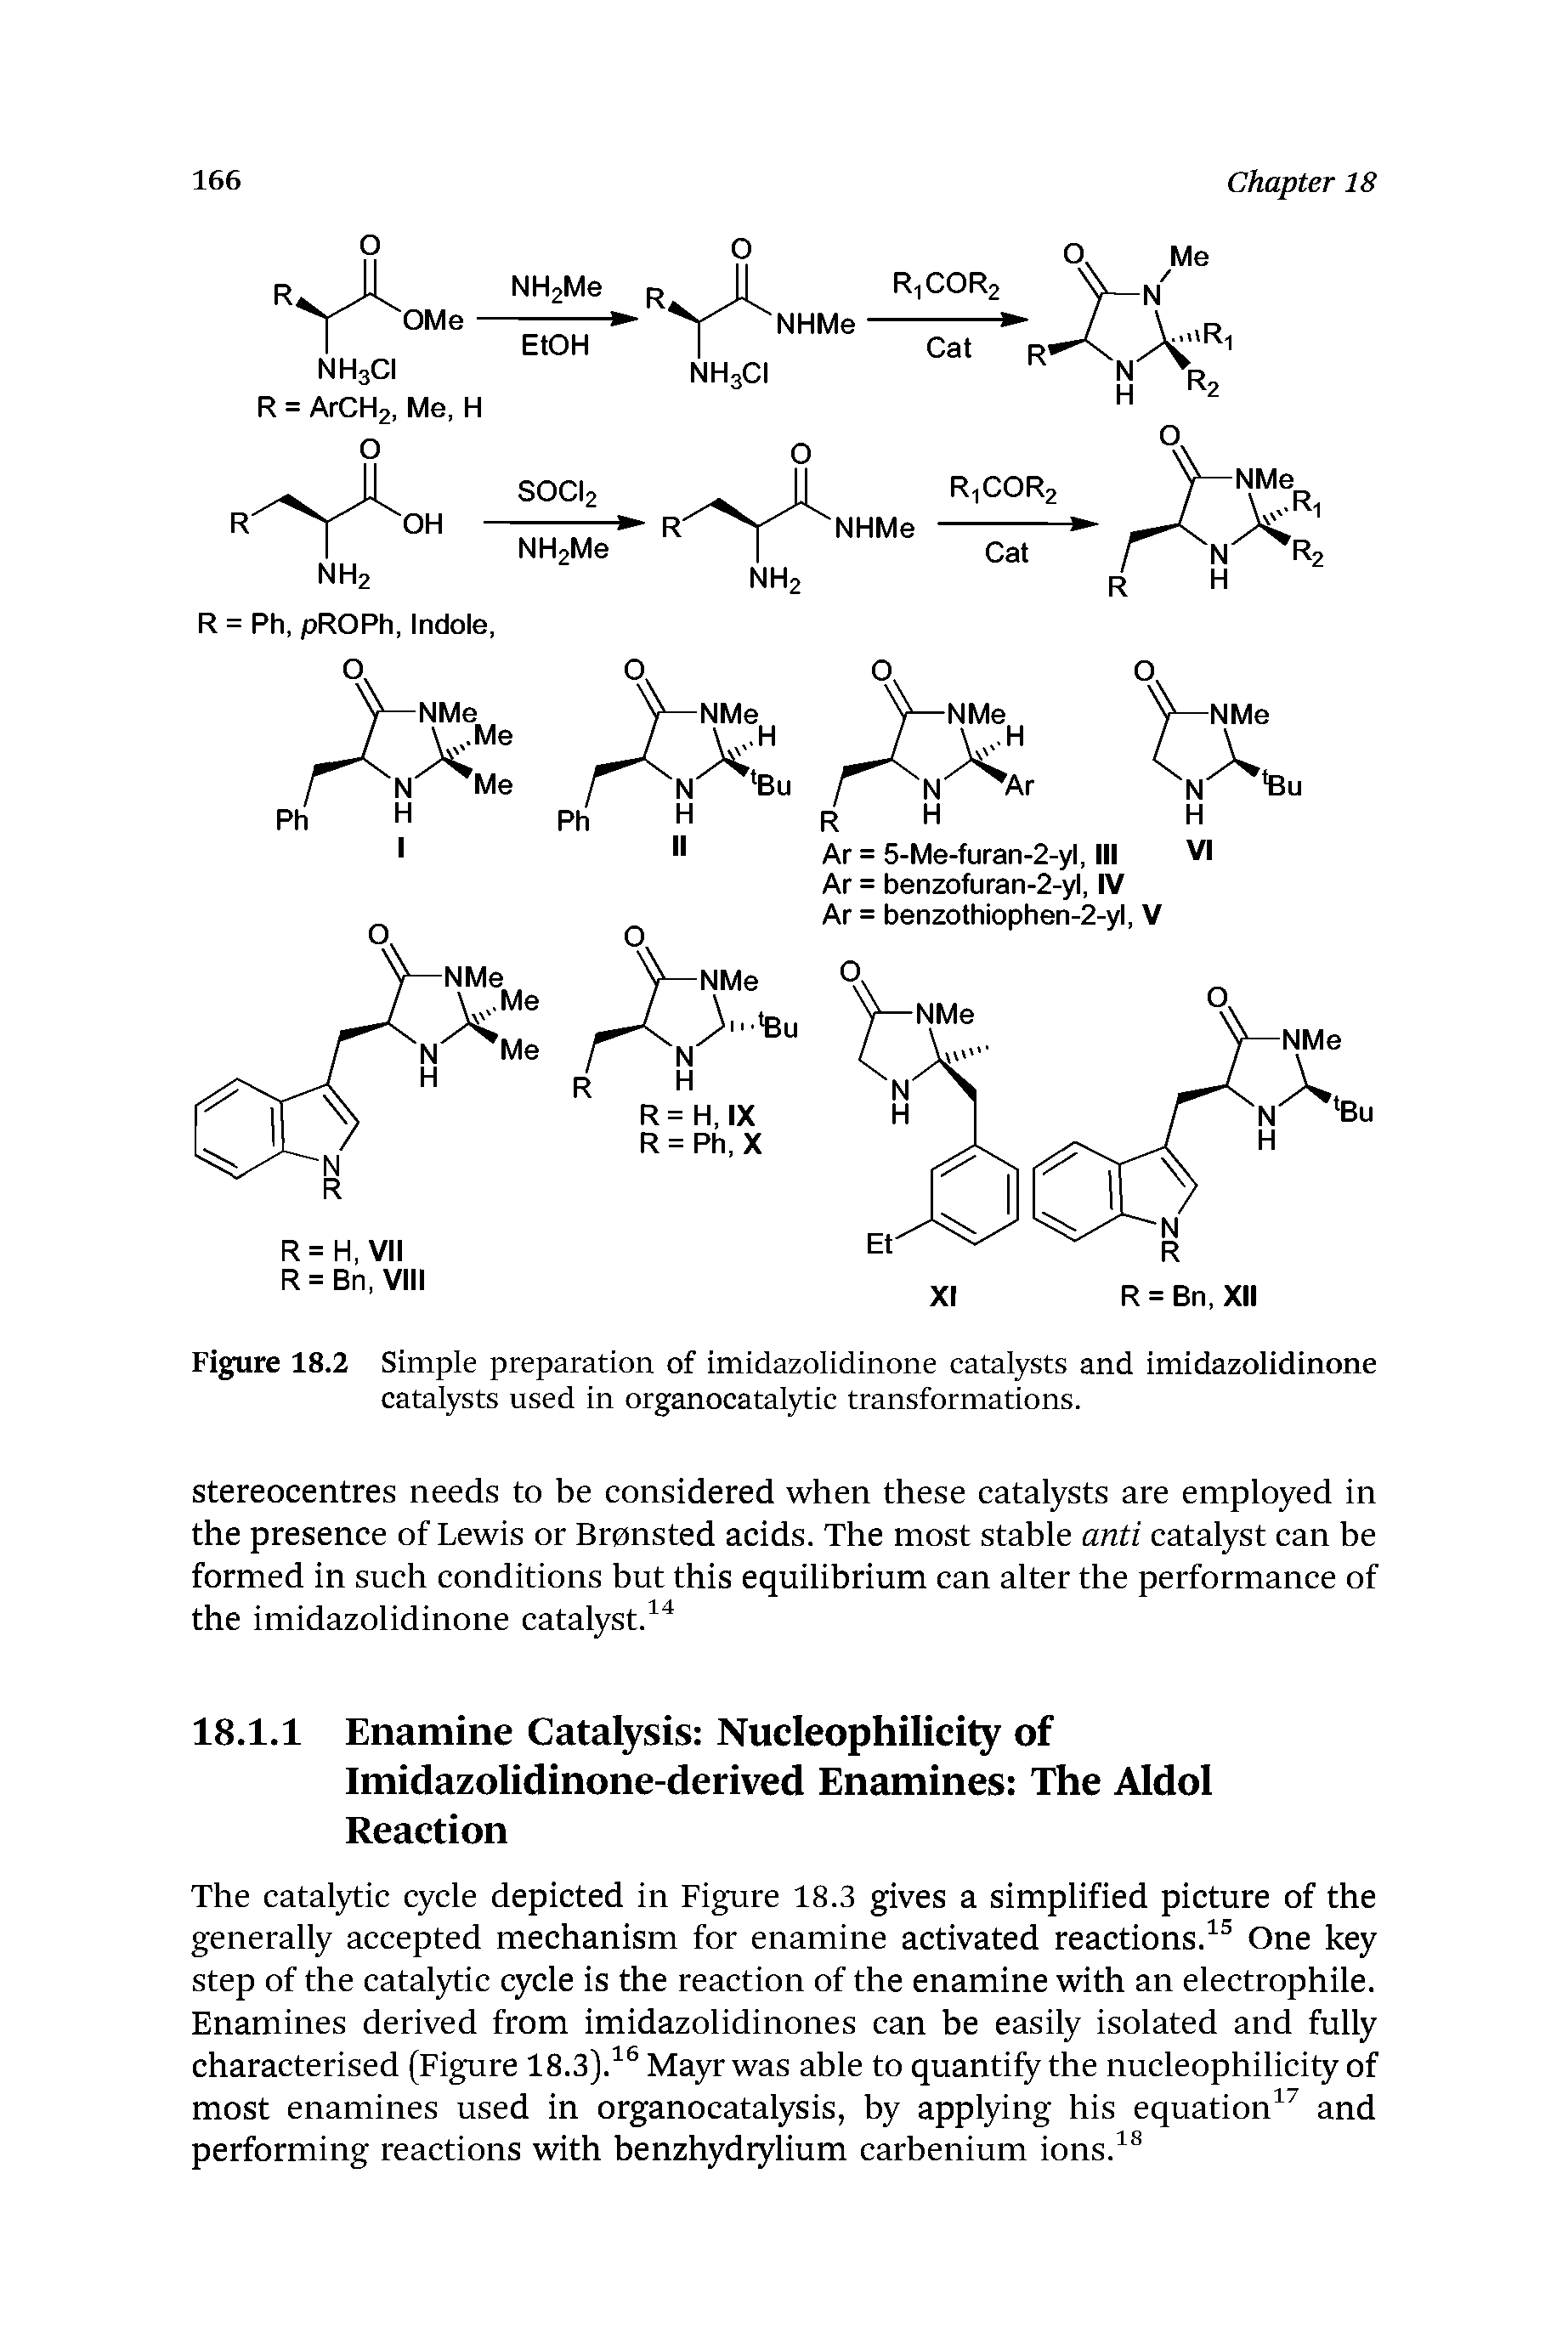 Figure 18.2 Simple preparation of imidazolidinone catalysts and imidazolidinone catalysts used in organocatalytic transformations.